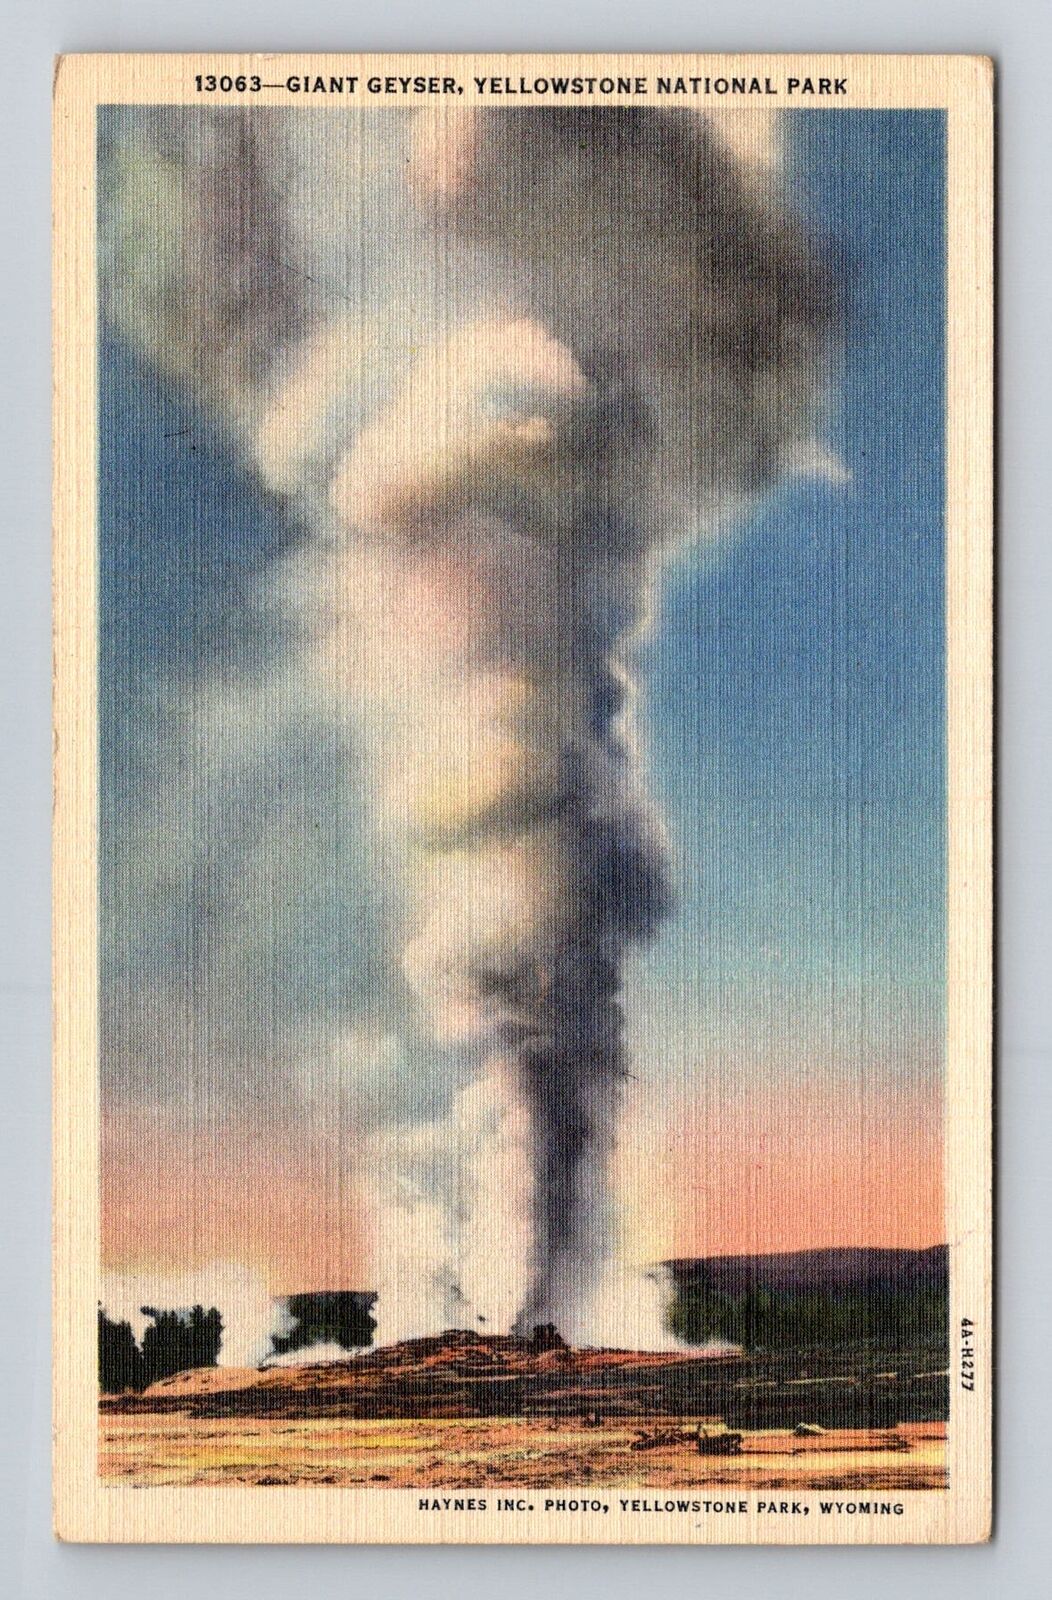 Yellowstone National Park, Giant Geyser, Series #13063 Vintage Souvenir Postcard